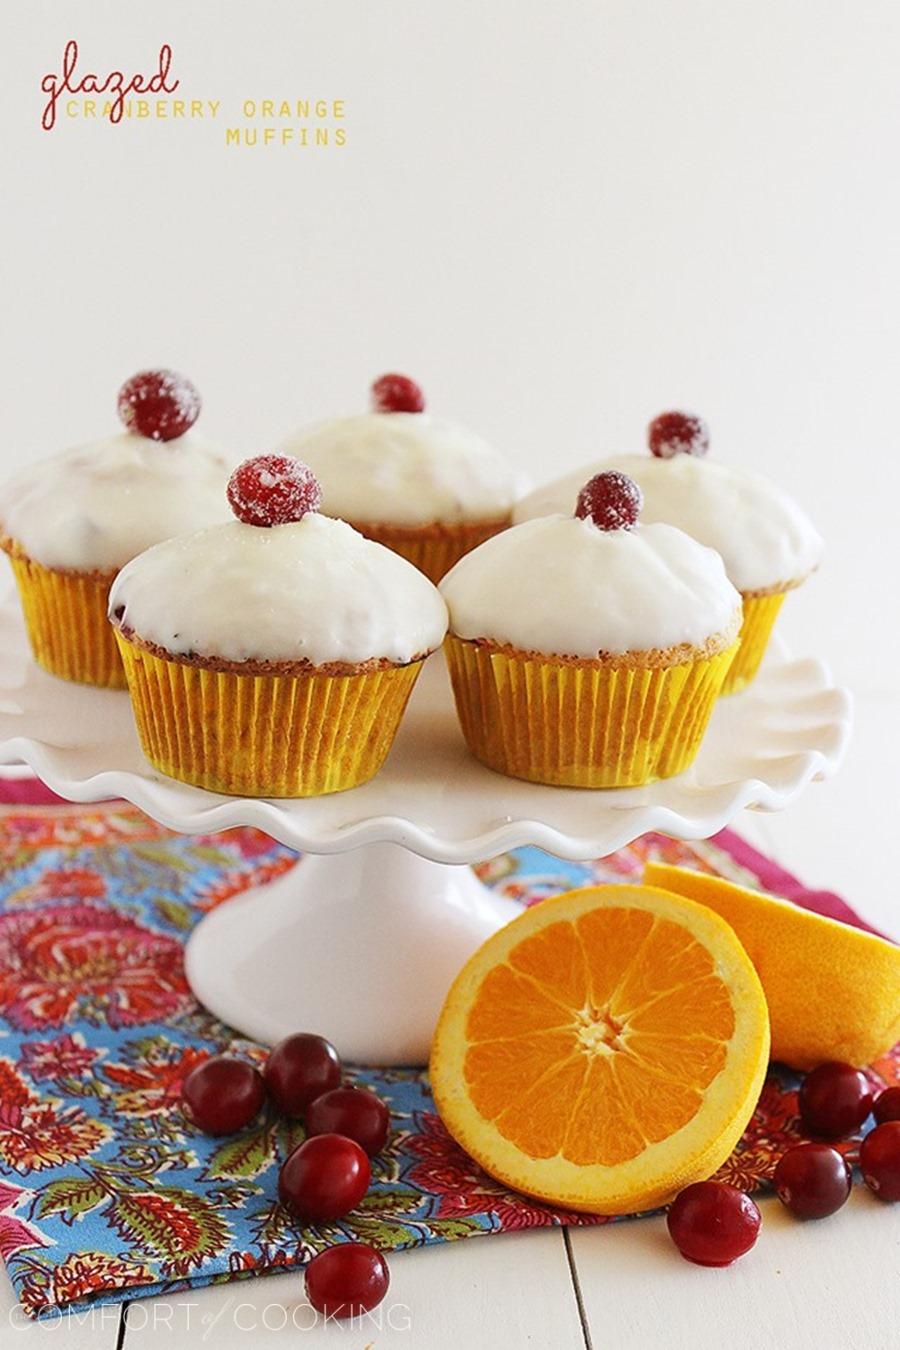 Glazed Cranberry Orange Muffins – Super soft, sweet and tart cranberry-orange muffins with an orange glaze! | thecomfortofcooking.com